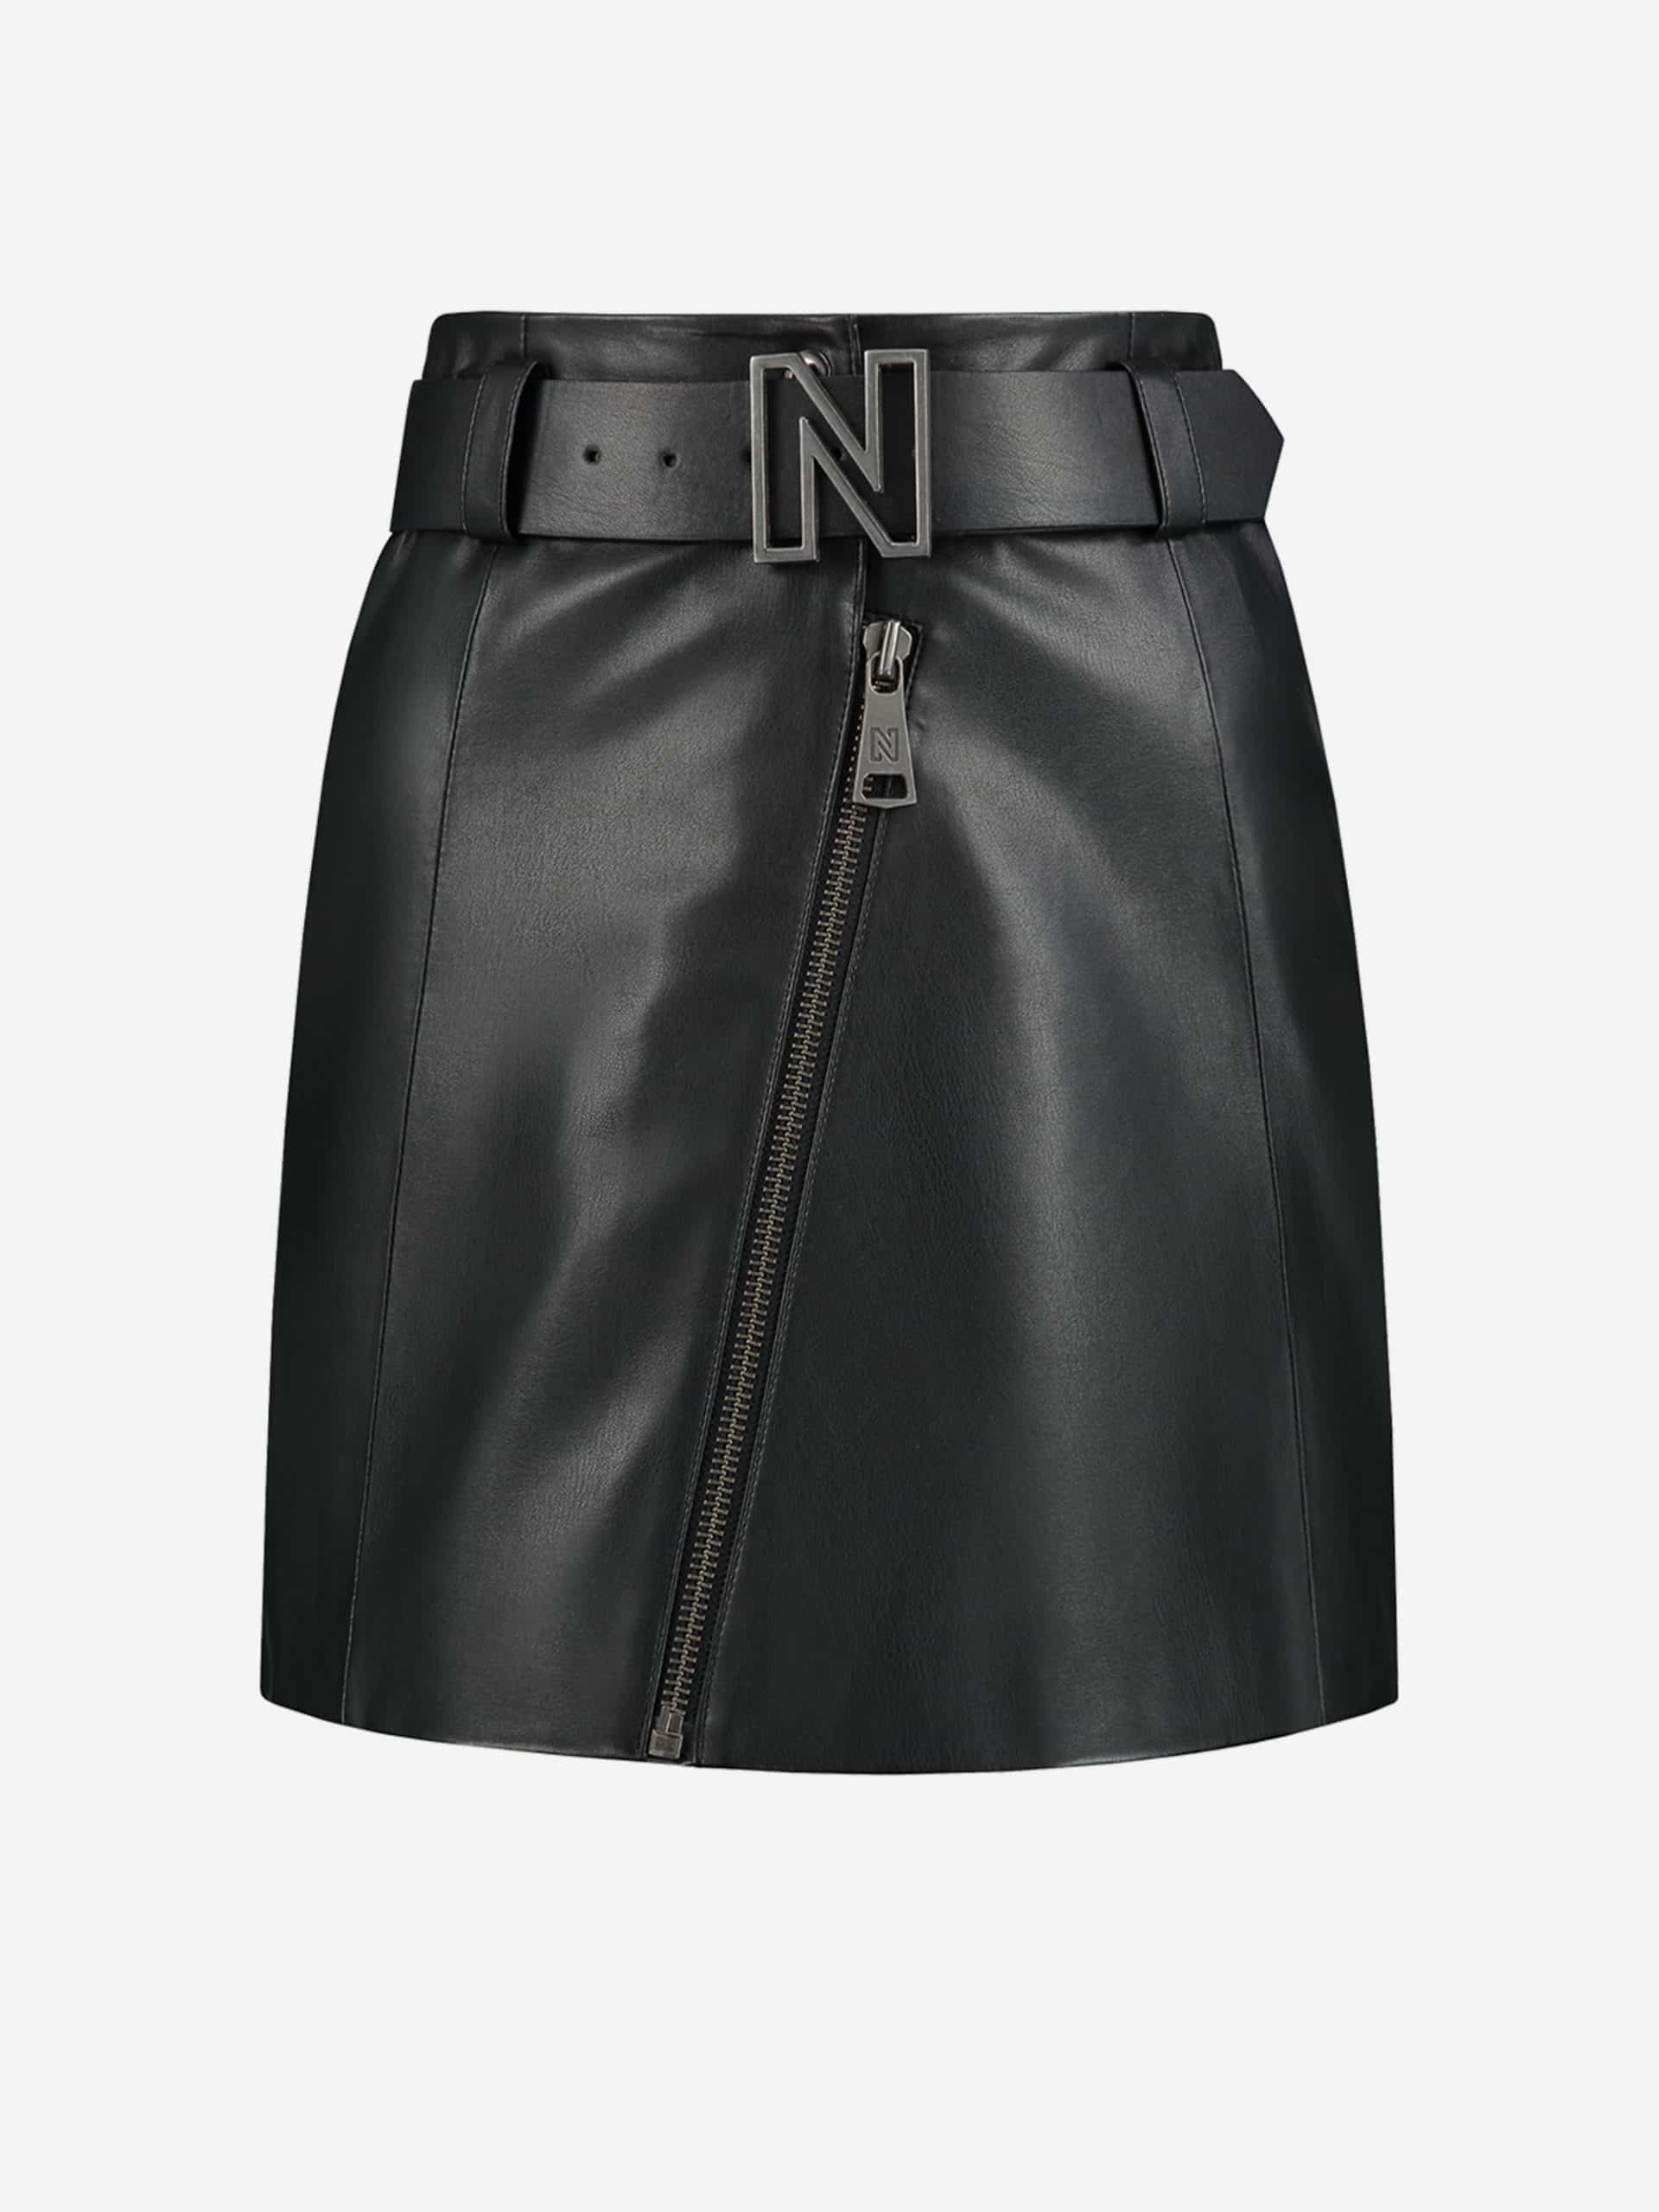 dood Korst Ambassade Nikkie Vegan leather skirt with N logo belt - Siphra Studio